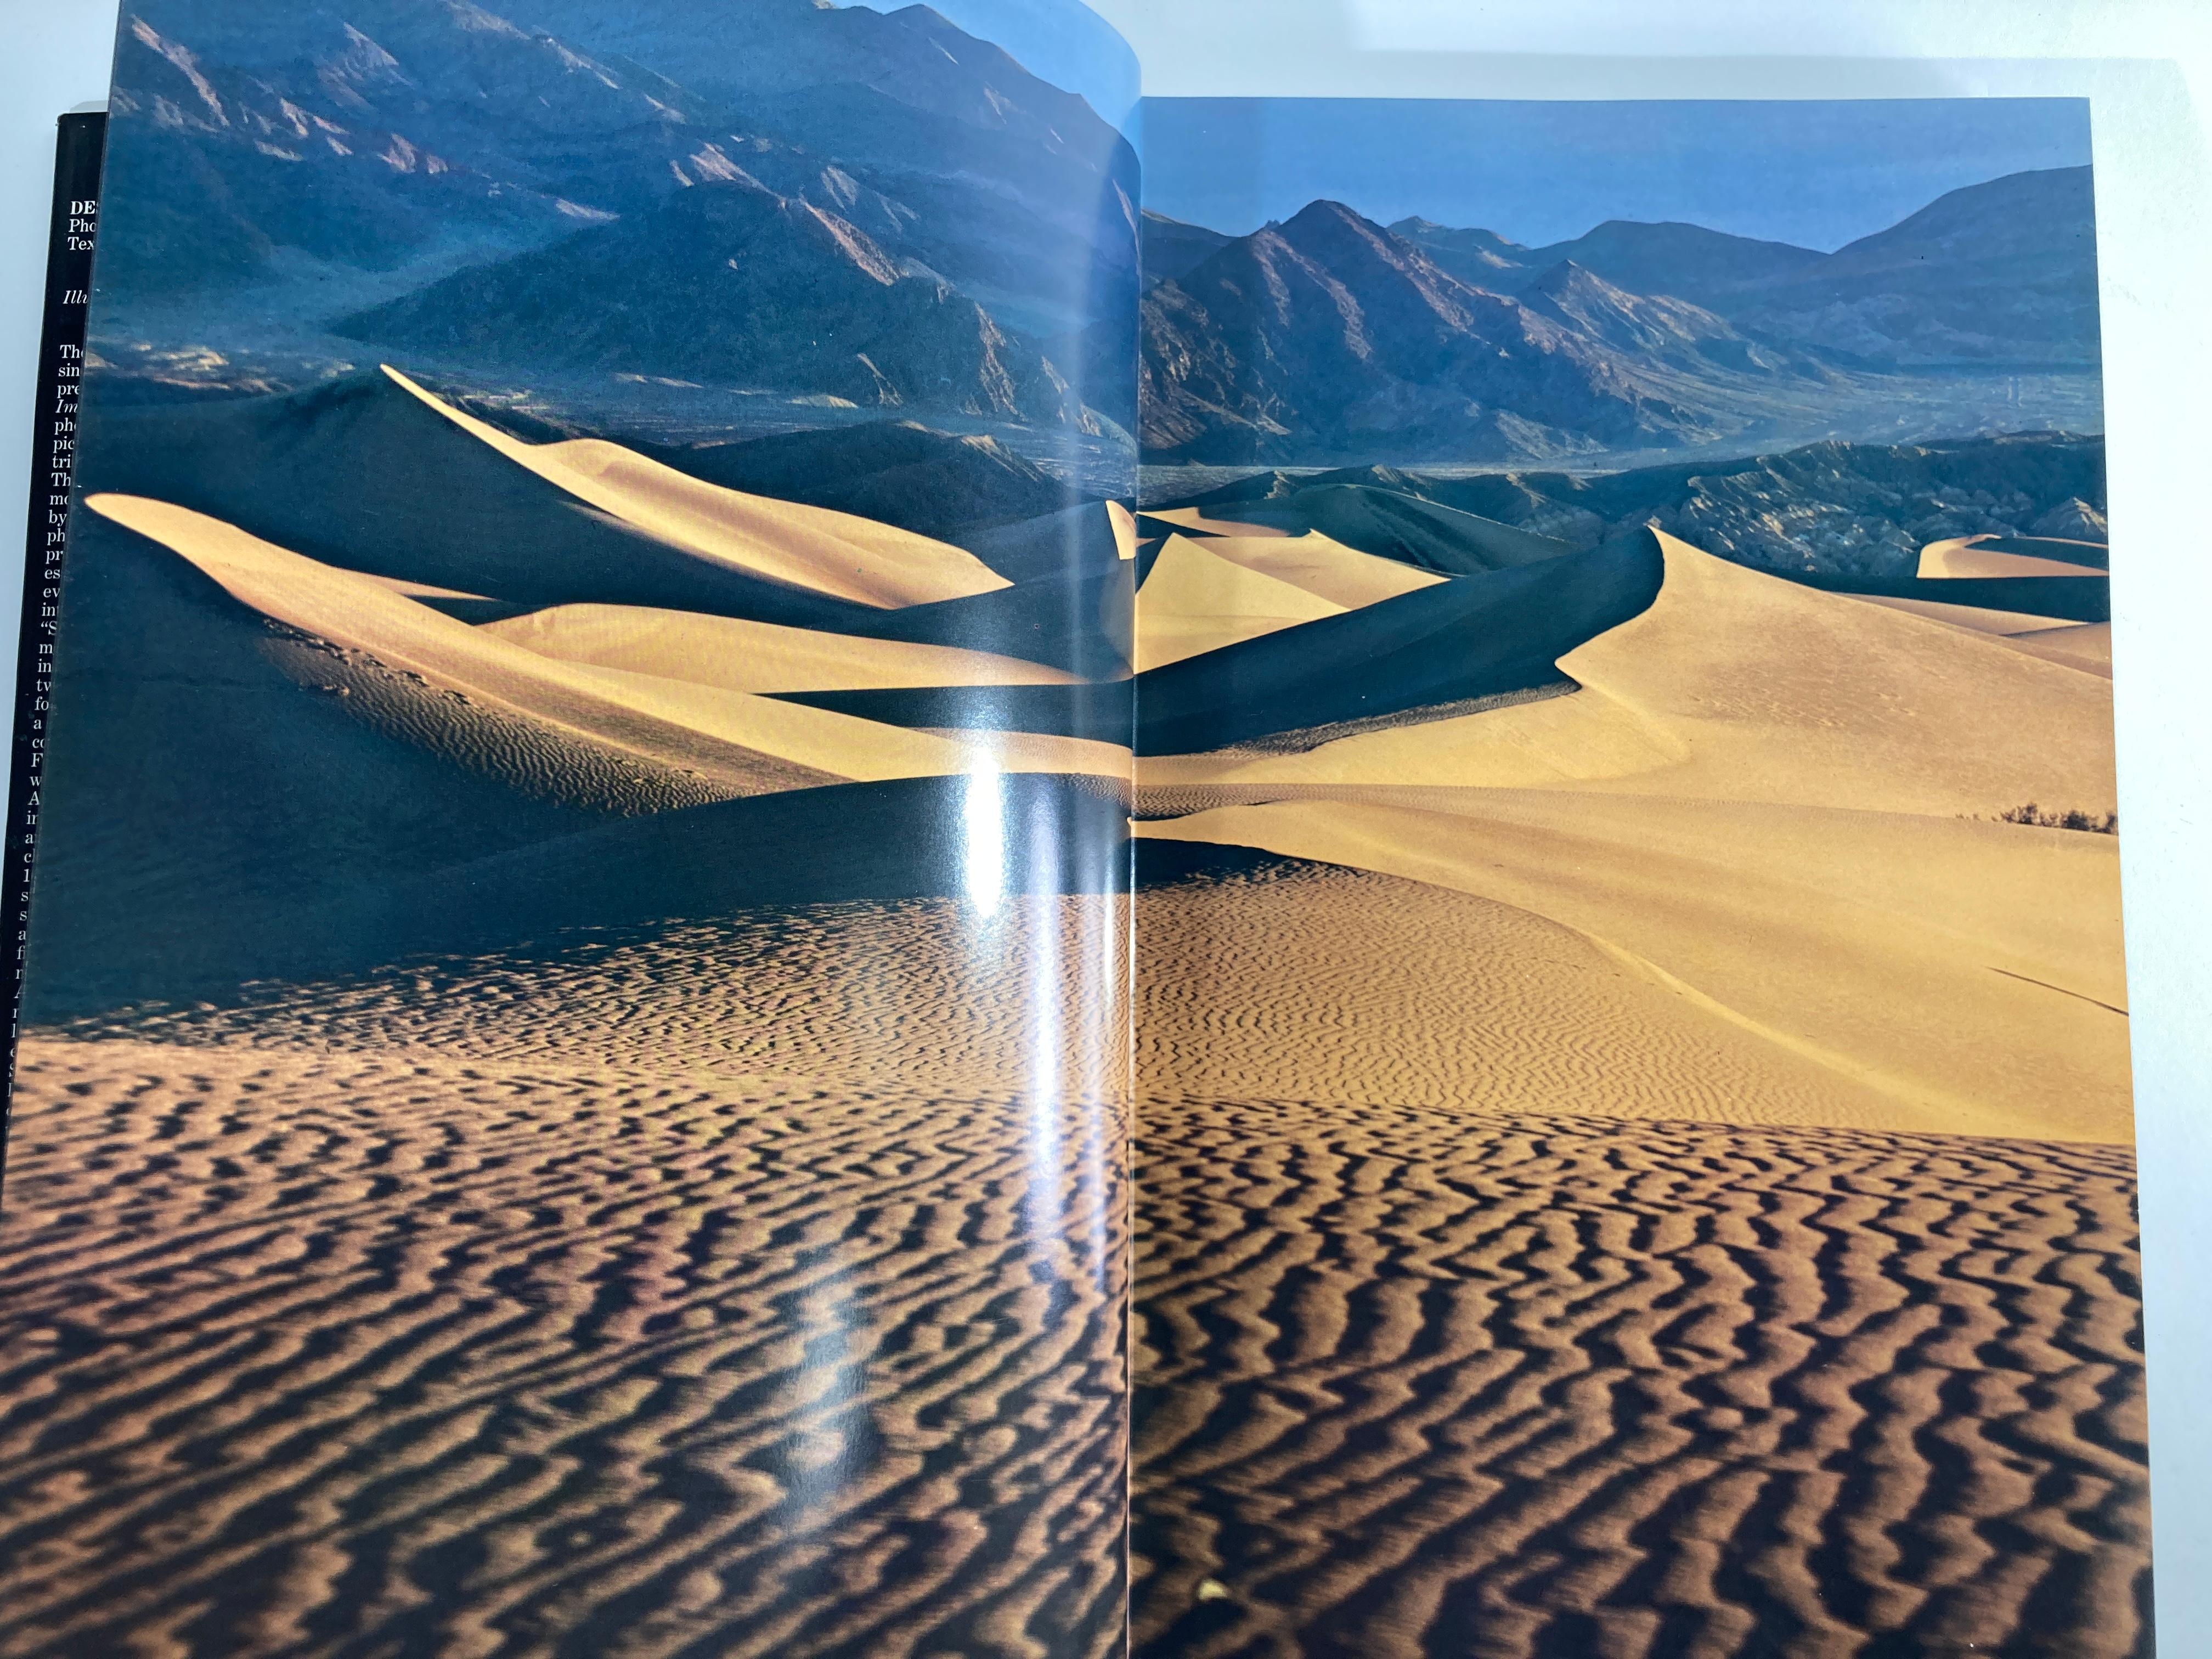 Desert Images an American Landscape Large Hardcover Book 1